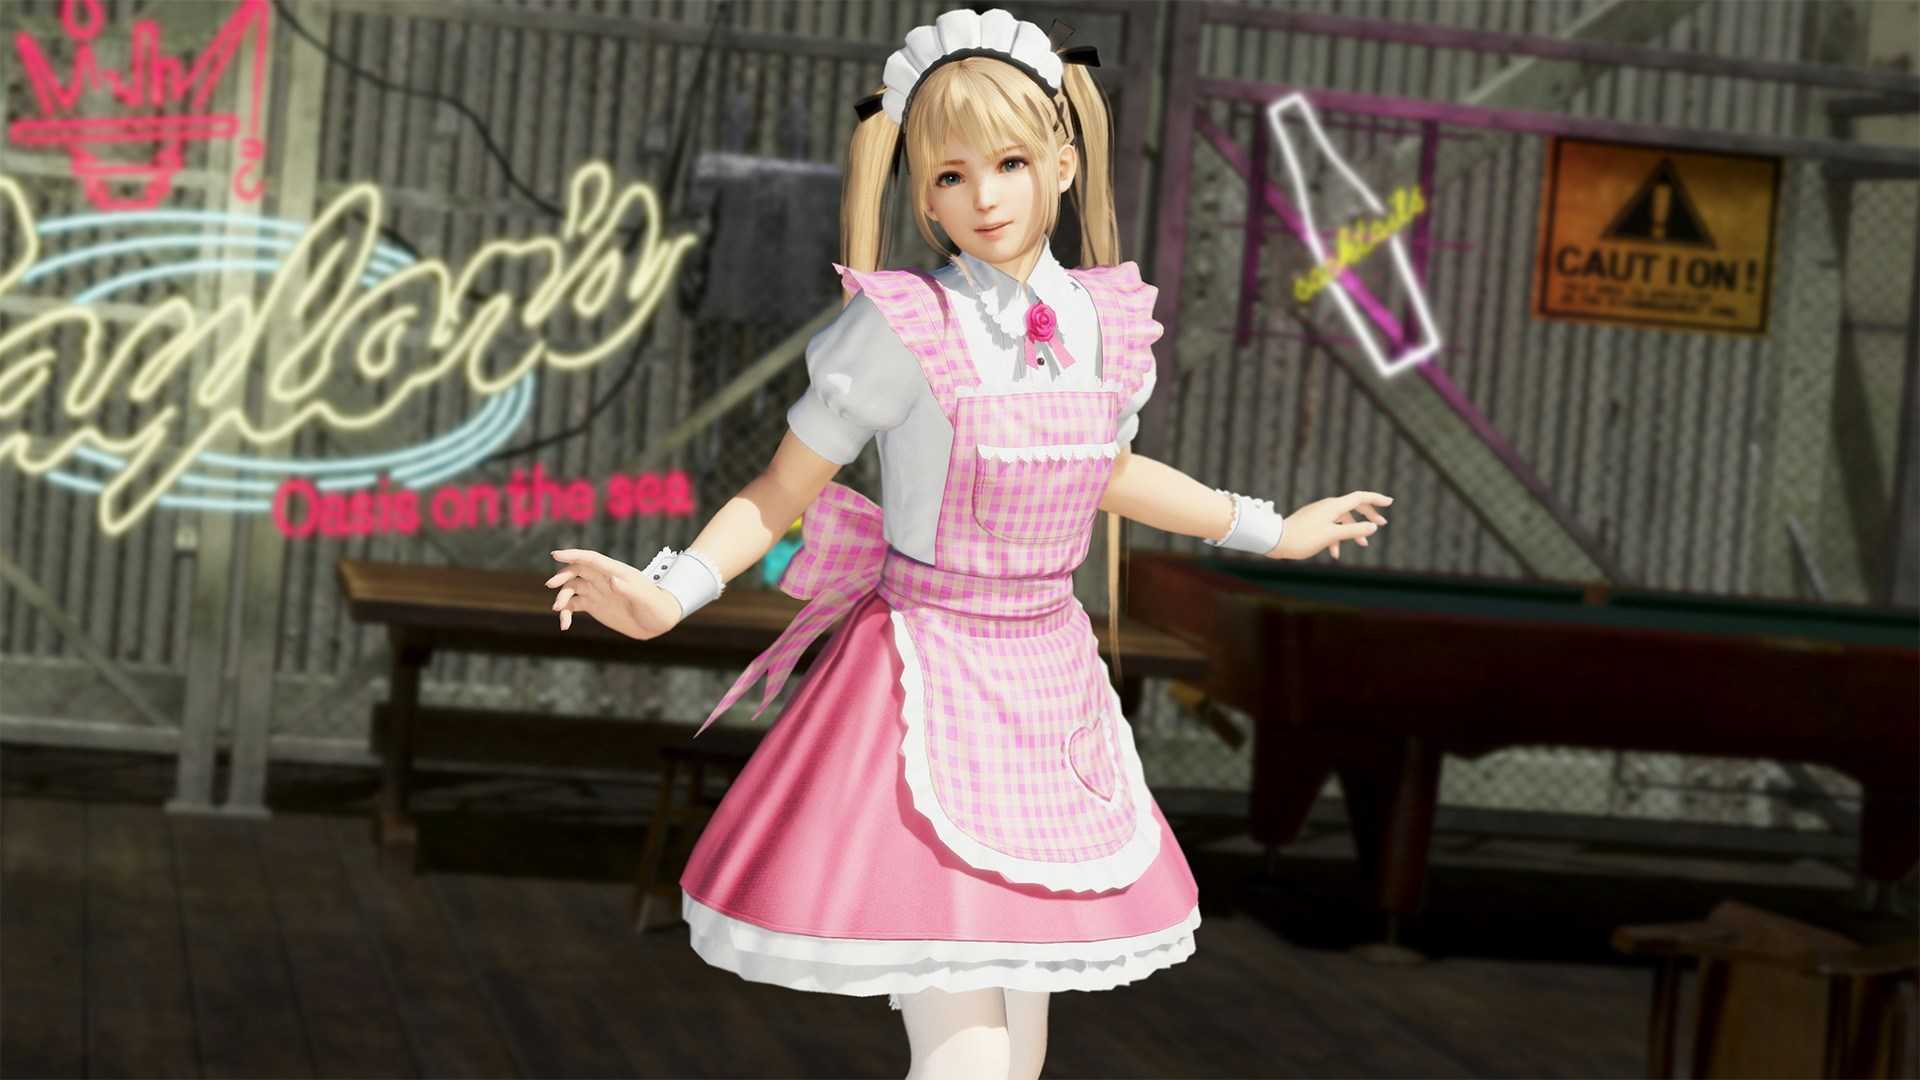 Buy [revival] Doa6 Maid Costume Marie Rose Xbox Store Checker